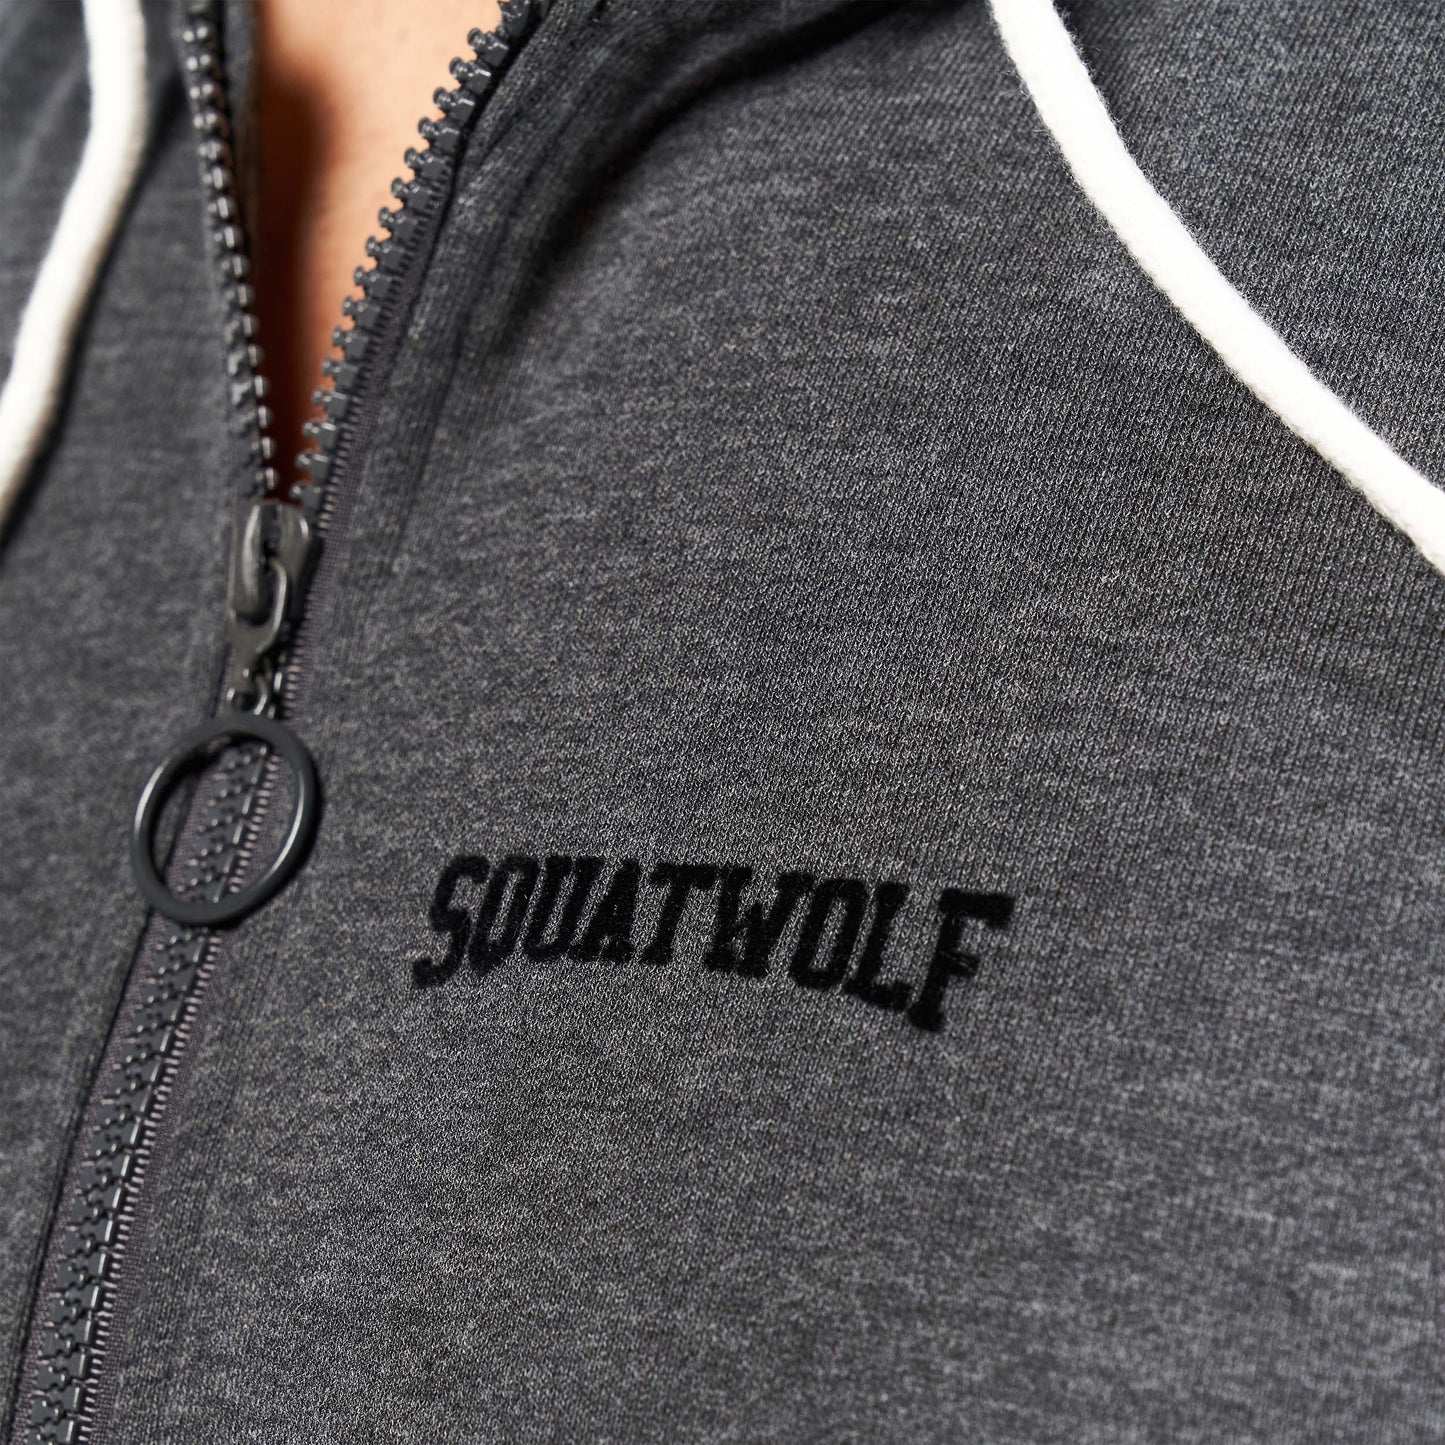 squatwolf-gym-wear-golden-era-new-school-hooded-tank-black-marl-workout-tank-tops-for-men